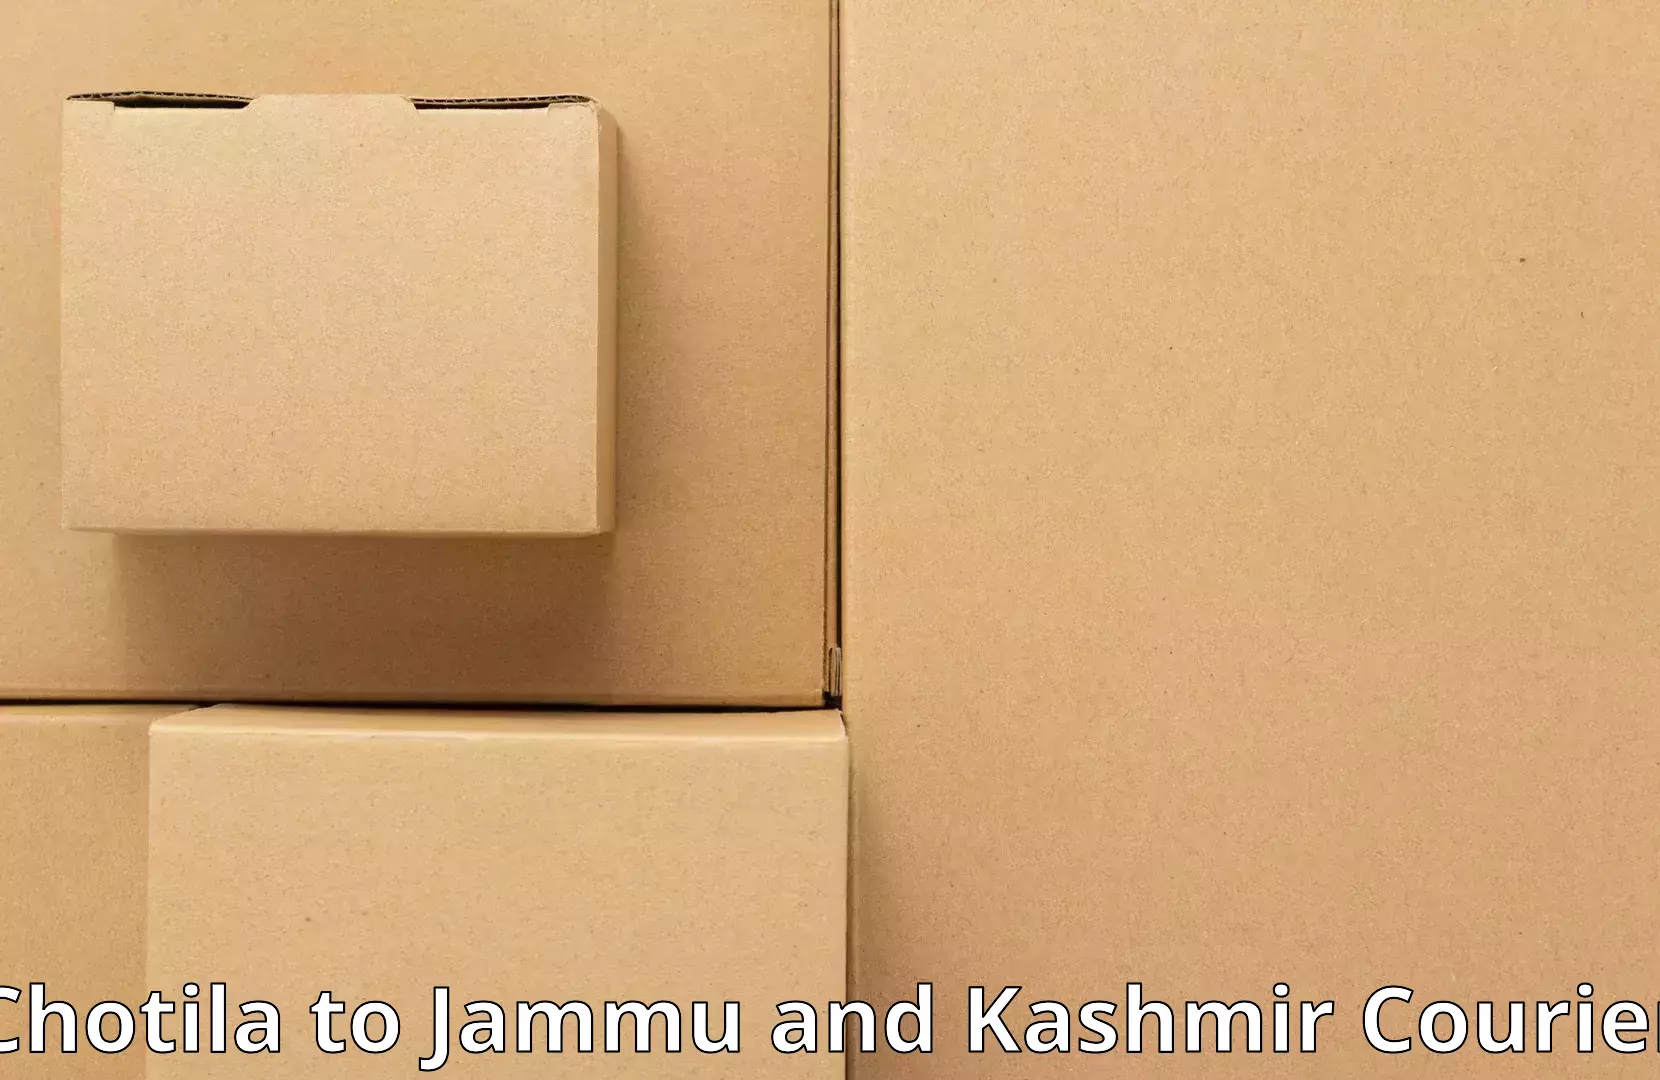 Seamless moving process Chotila to Srinagar Kashmir